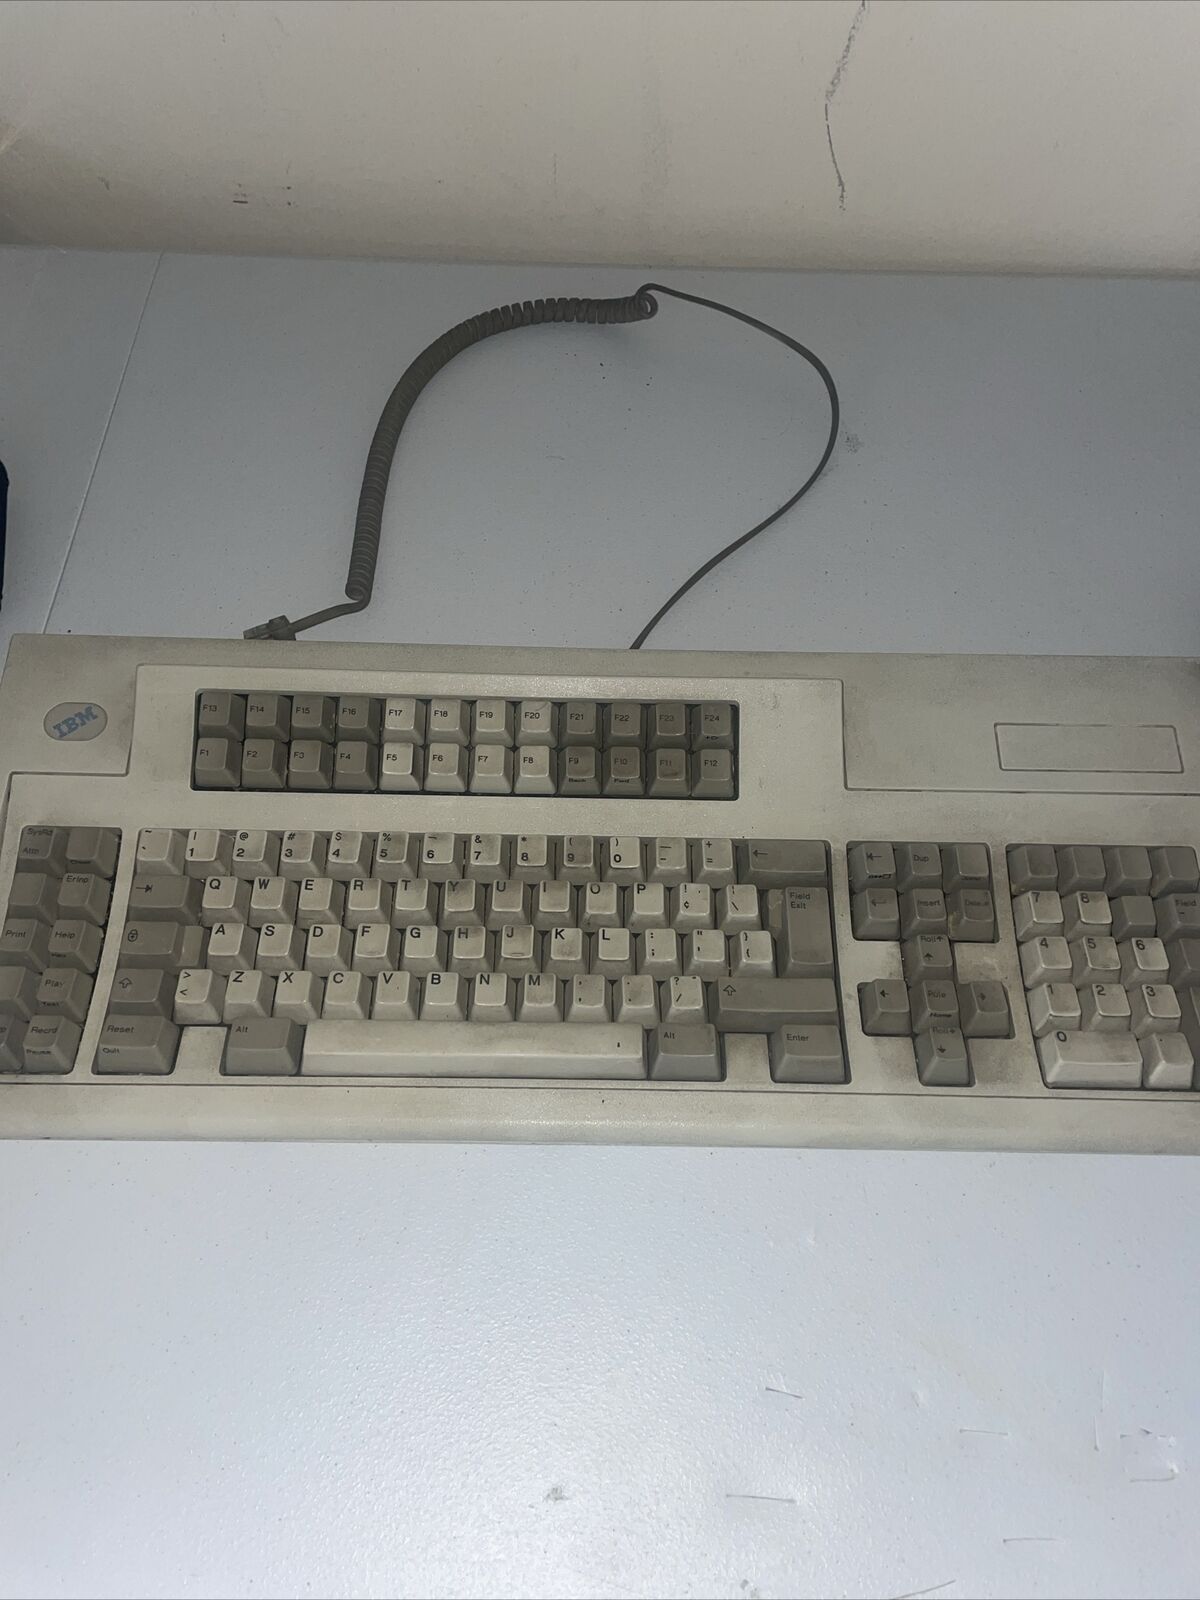 IBM Model F2 13A 1394167 Mechanical Keyboard 1996 UNTESTED MISSING KEYS UNTESTED